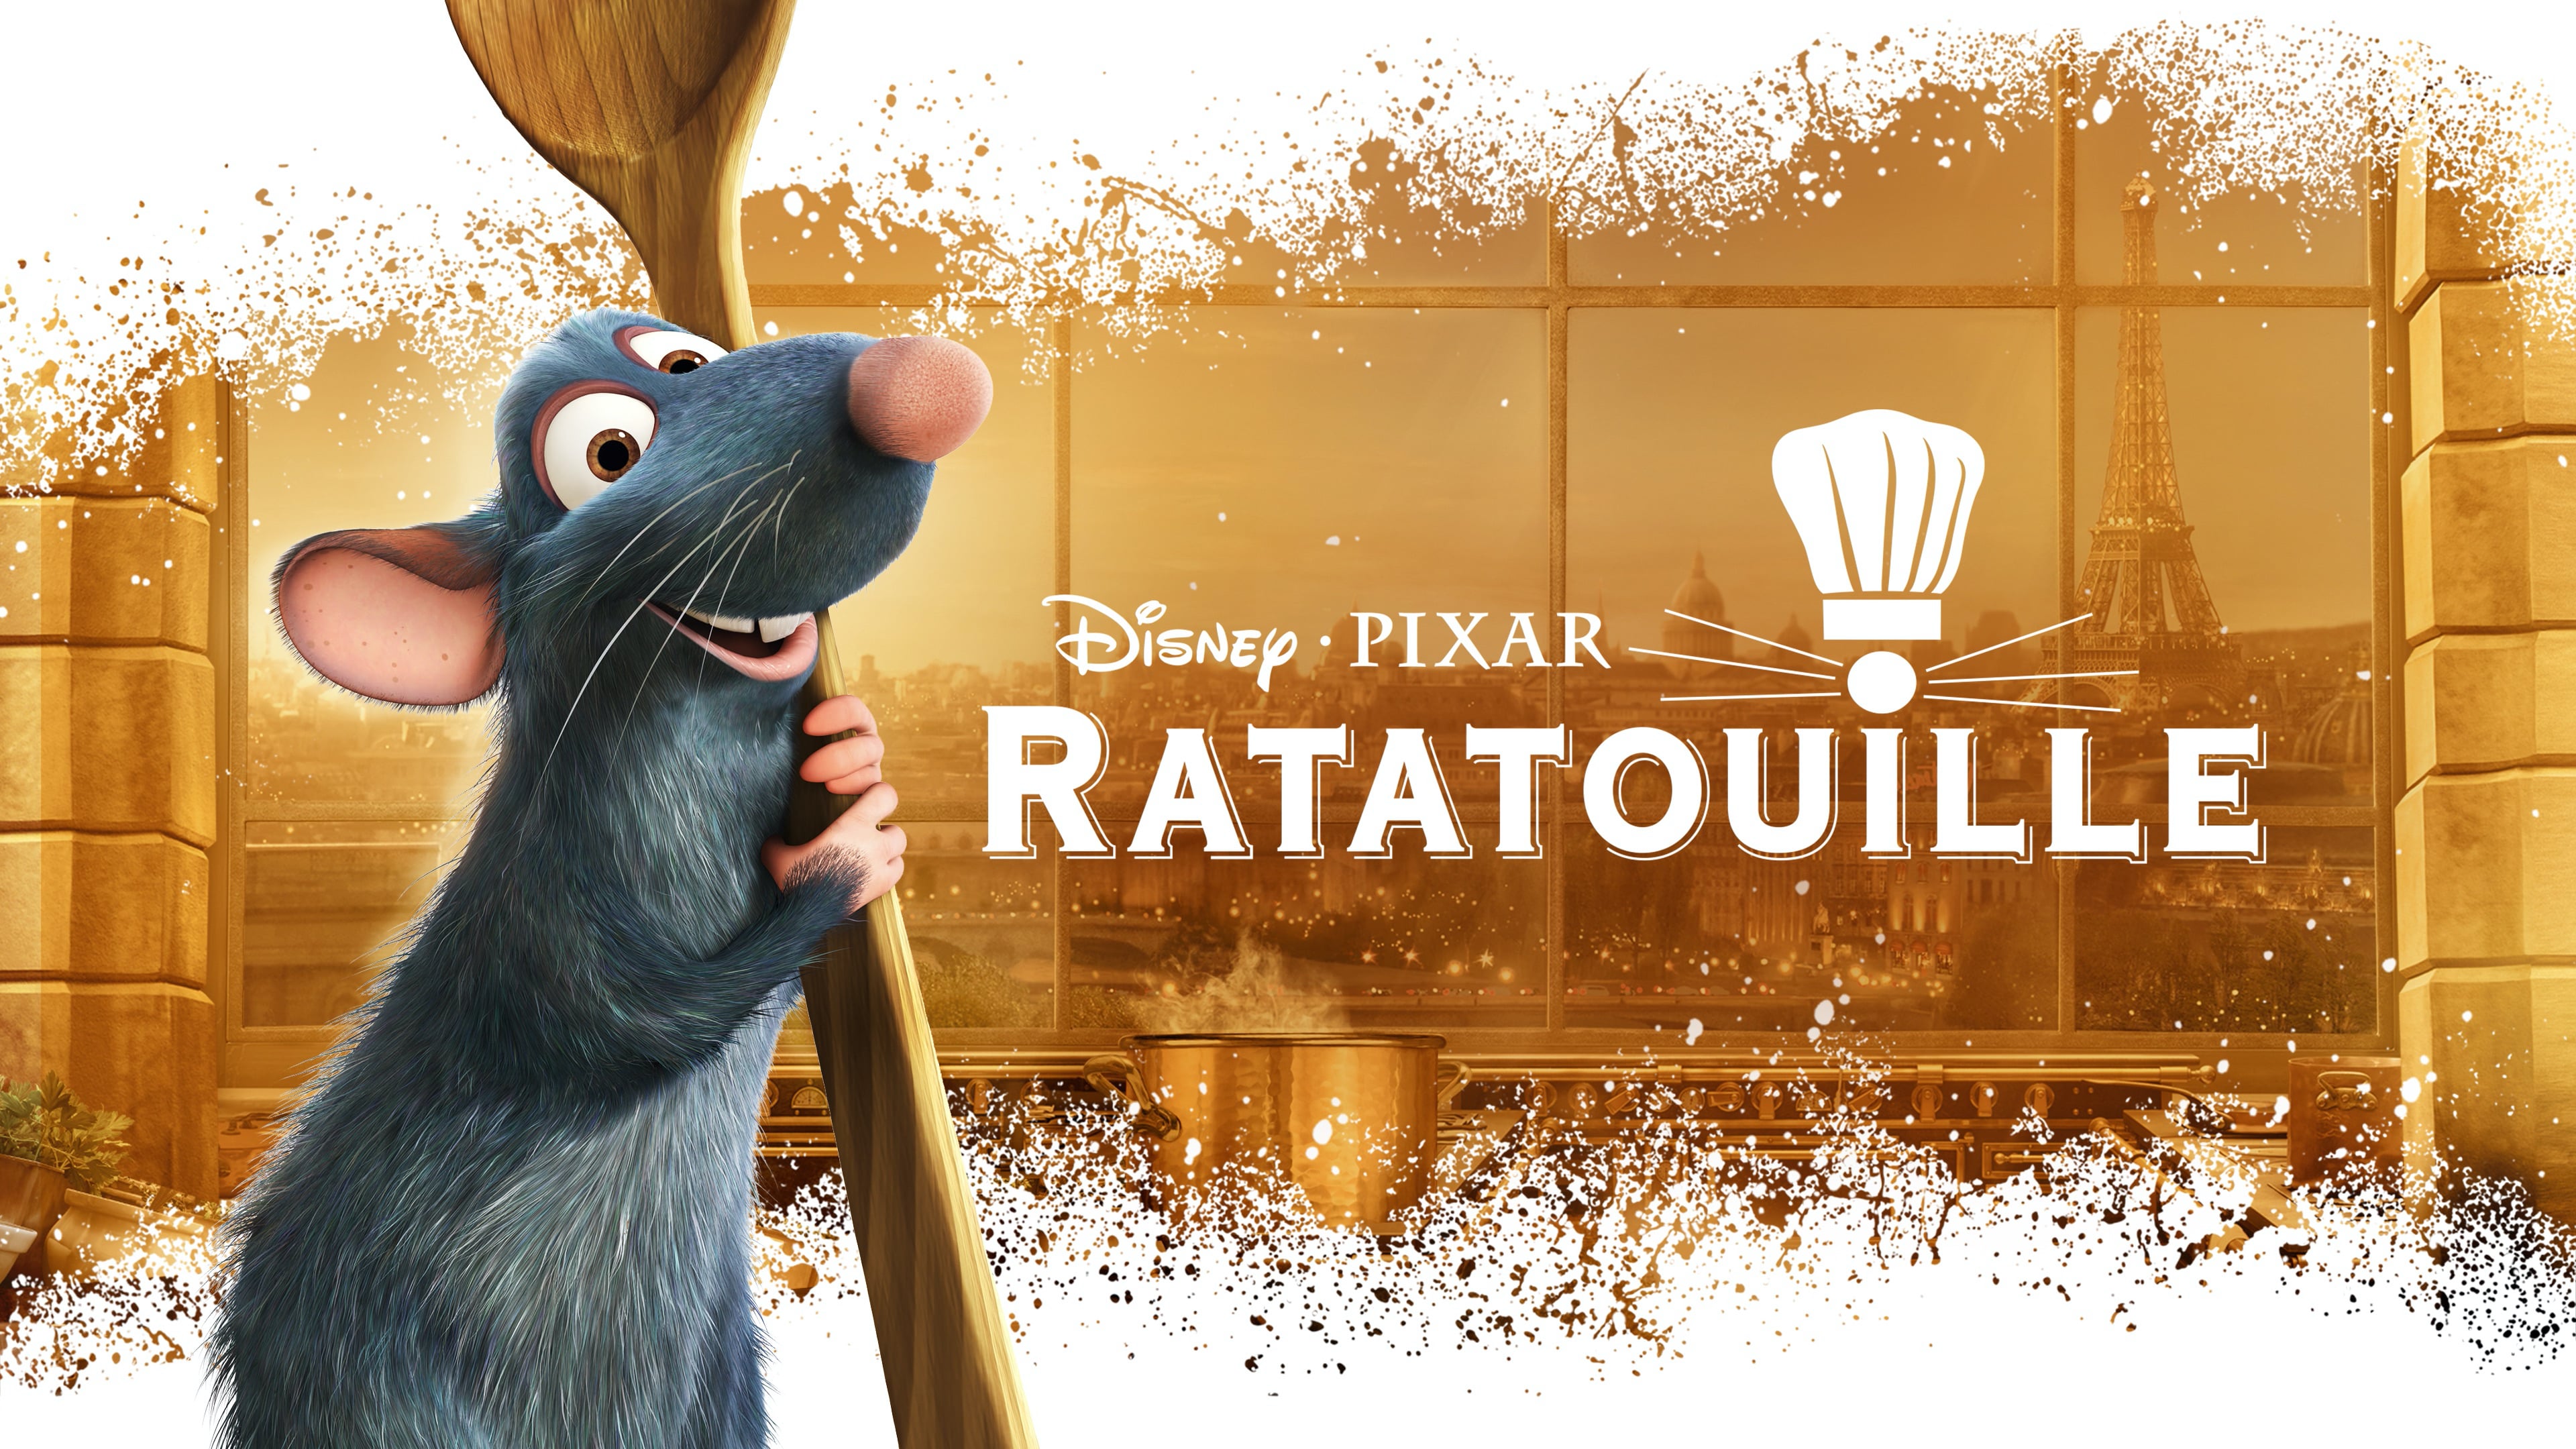 Movie Ratatouille 4k Ultra HD Wallpaper